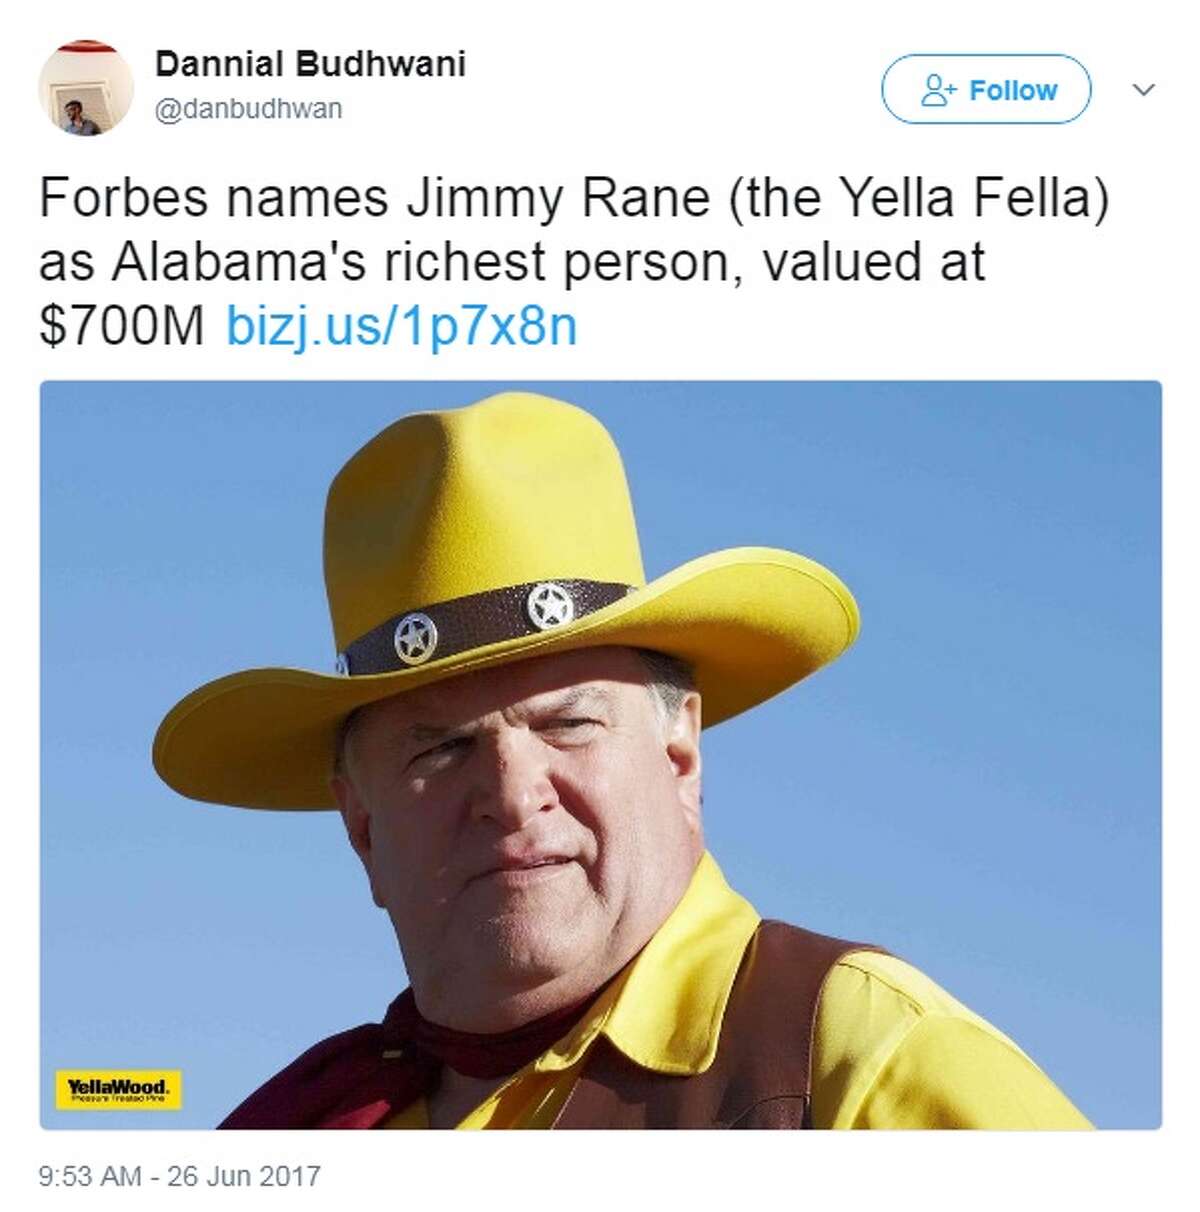 Alabama Jimmy Rane, $700 million Image source: Twitter